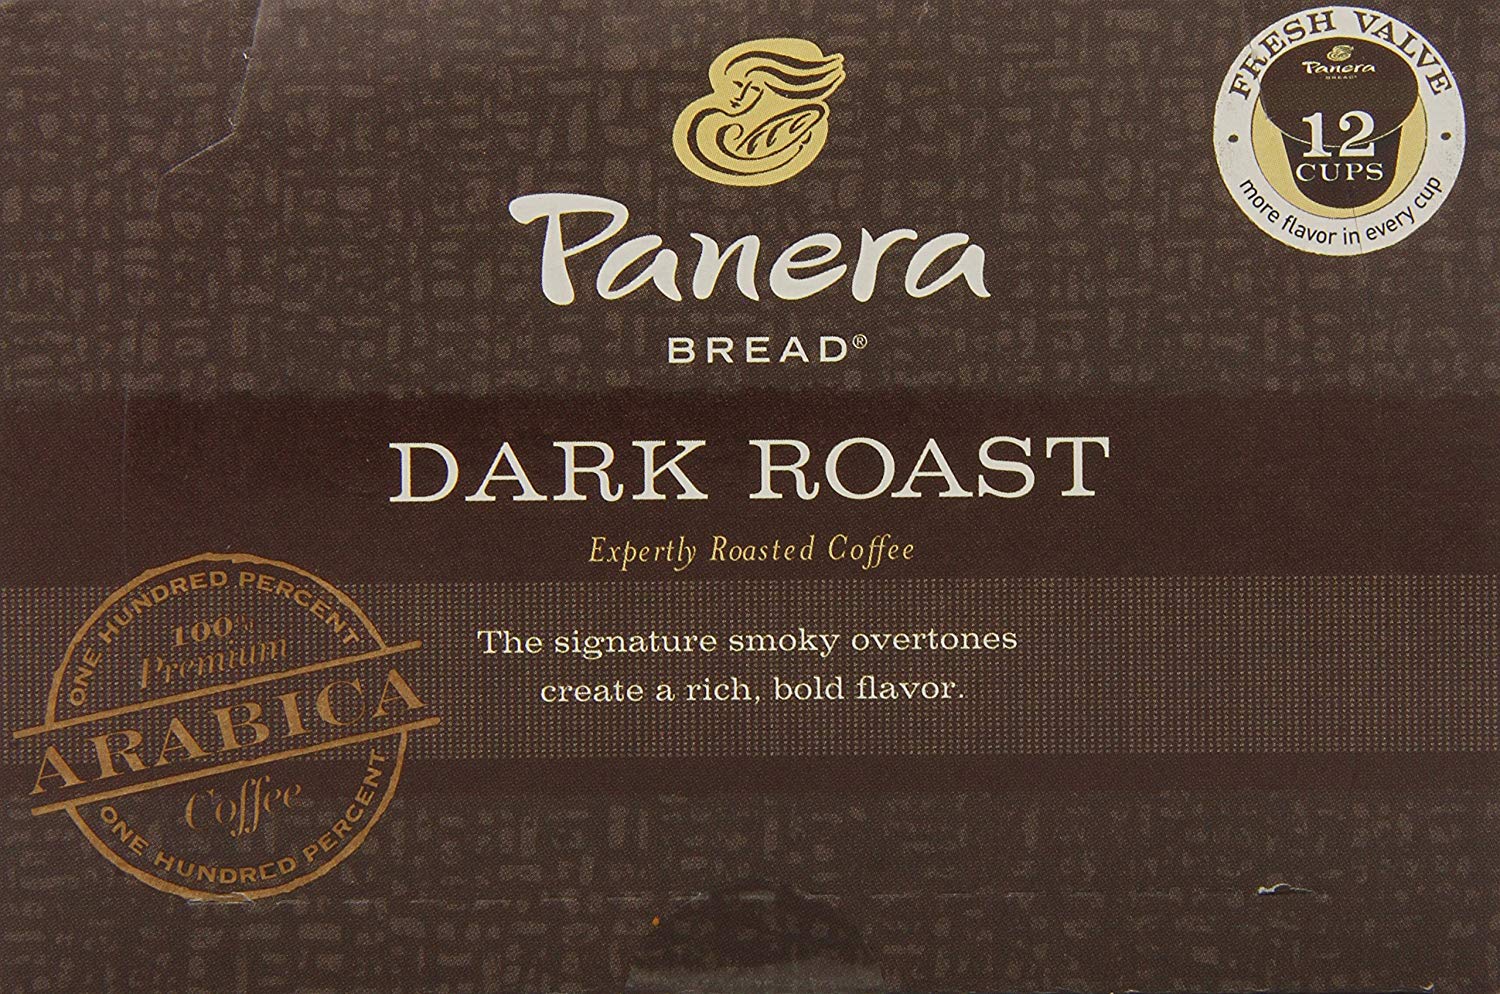 Dark Roast Coffee Brands Logo - Amazon.com : Panera Bread Coffee, Dark Roast, 12 Count : Grocery